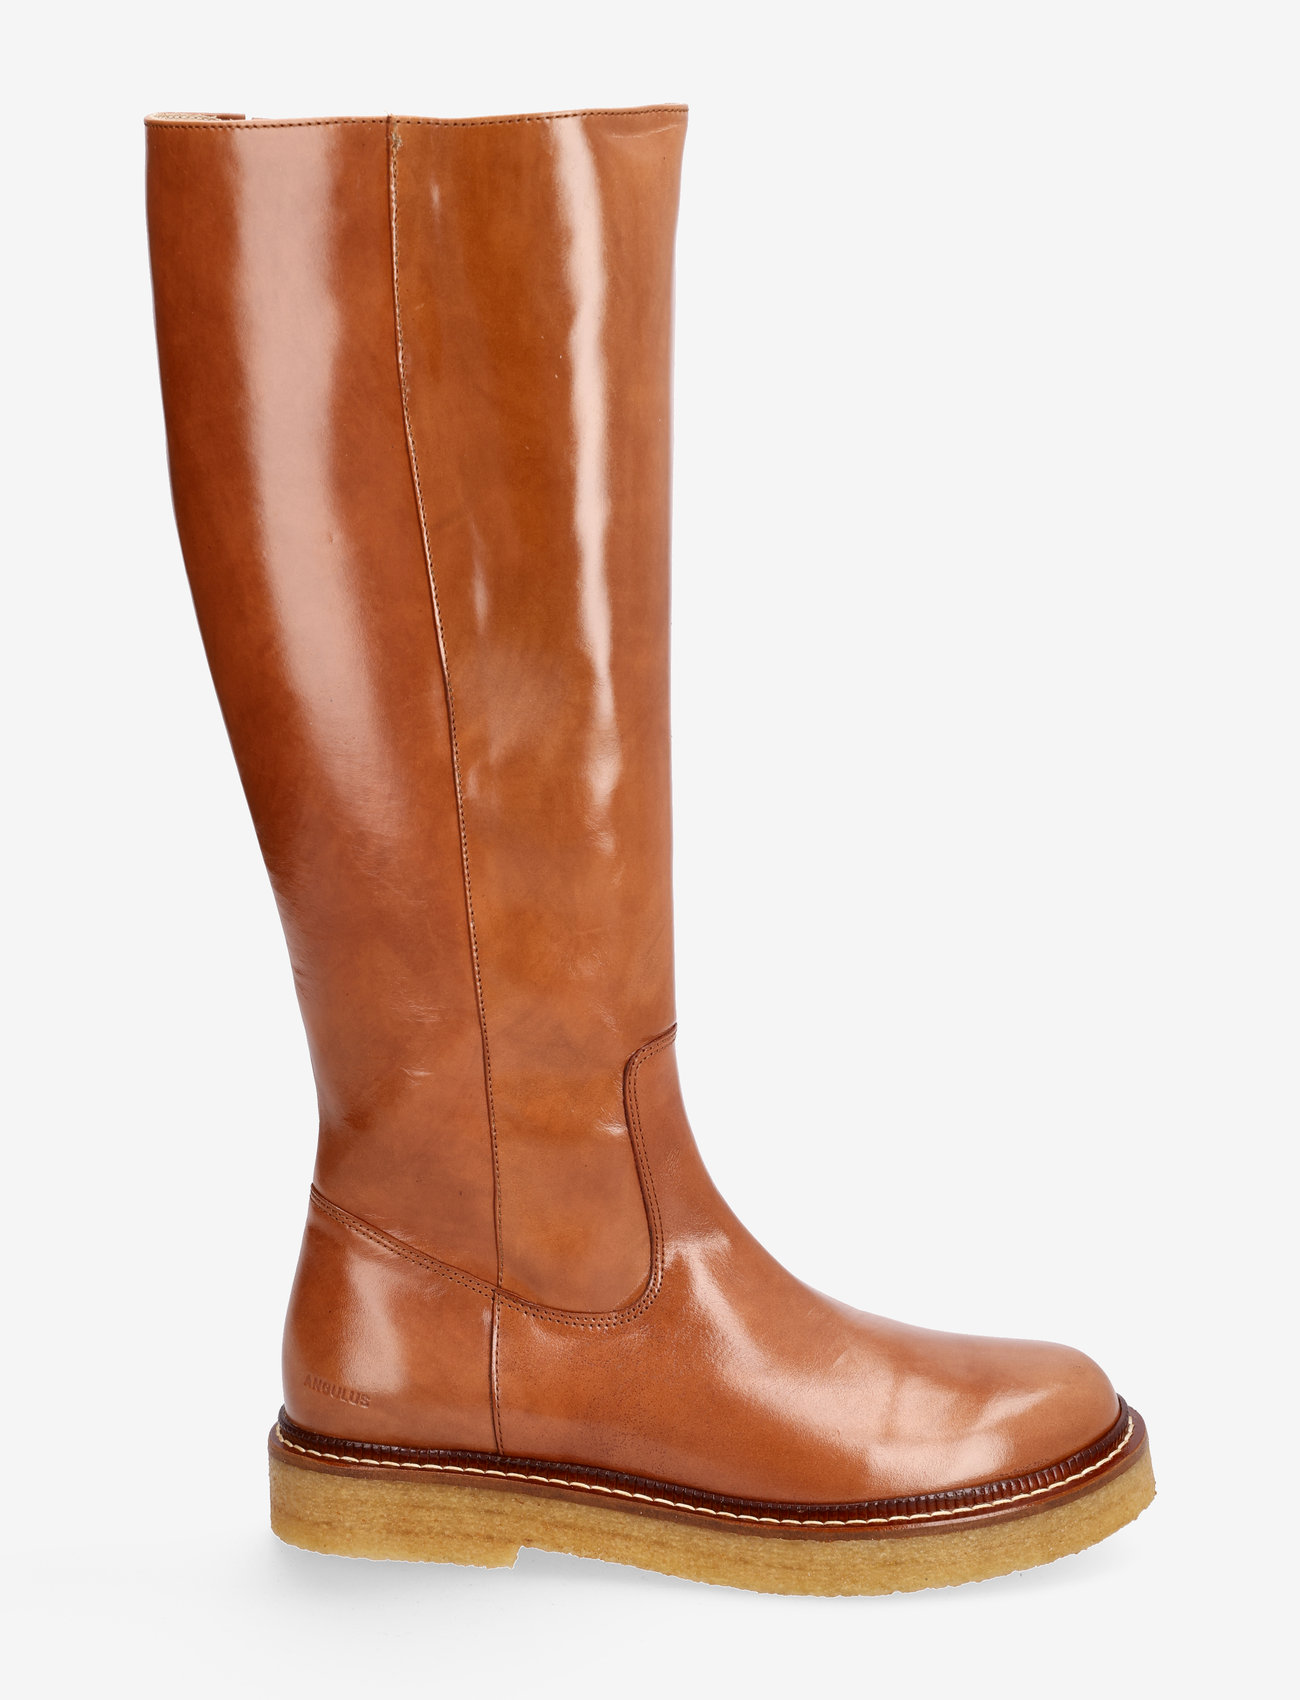 ANGULUS - Boots - flat - kozaki klasyczne - 1838/002 cognac/dark brown - 1